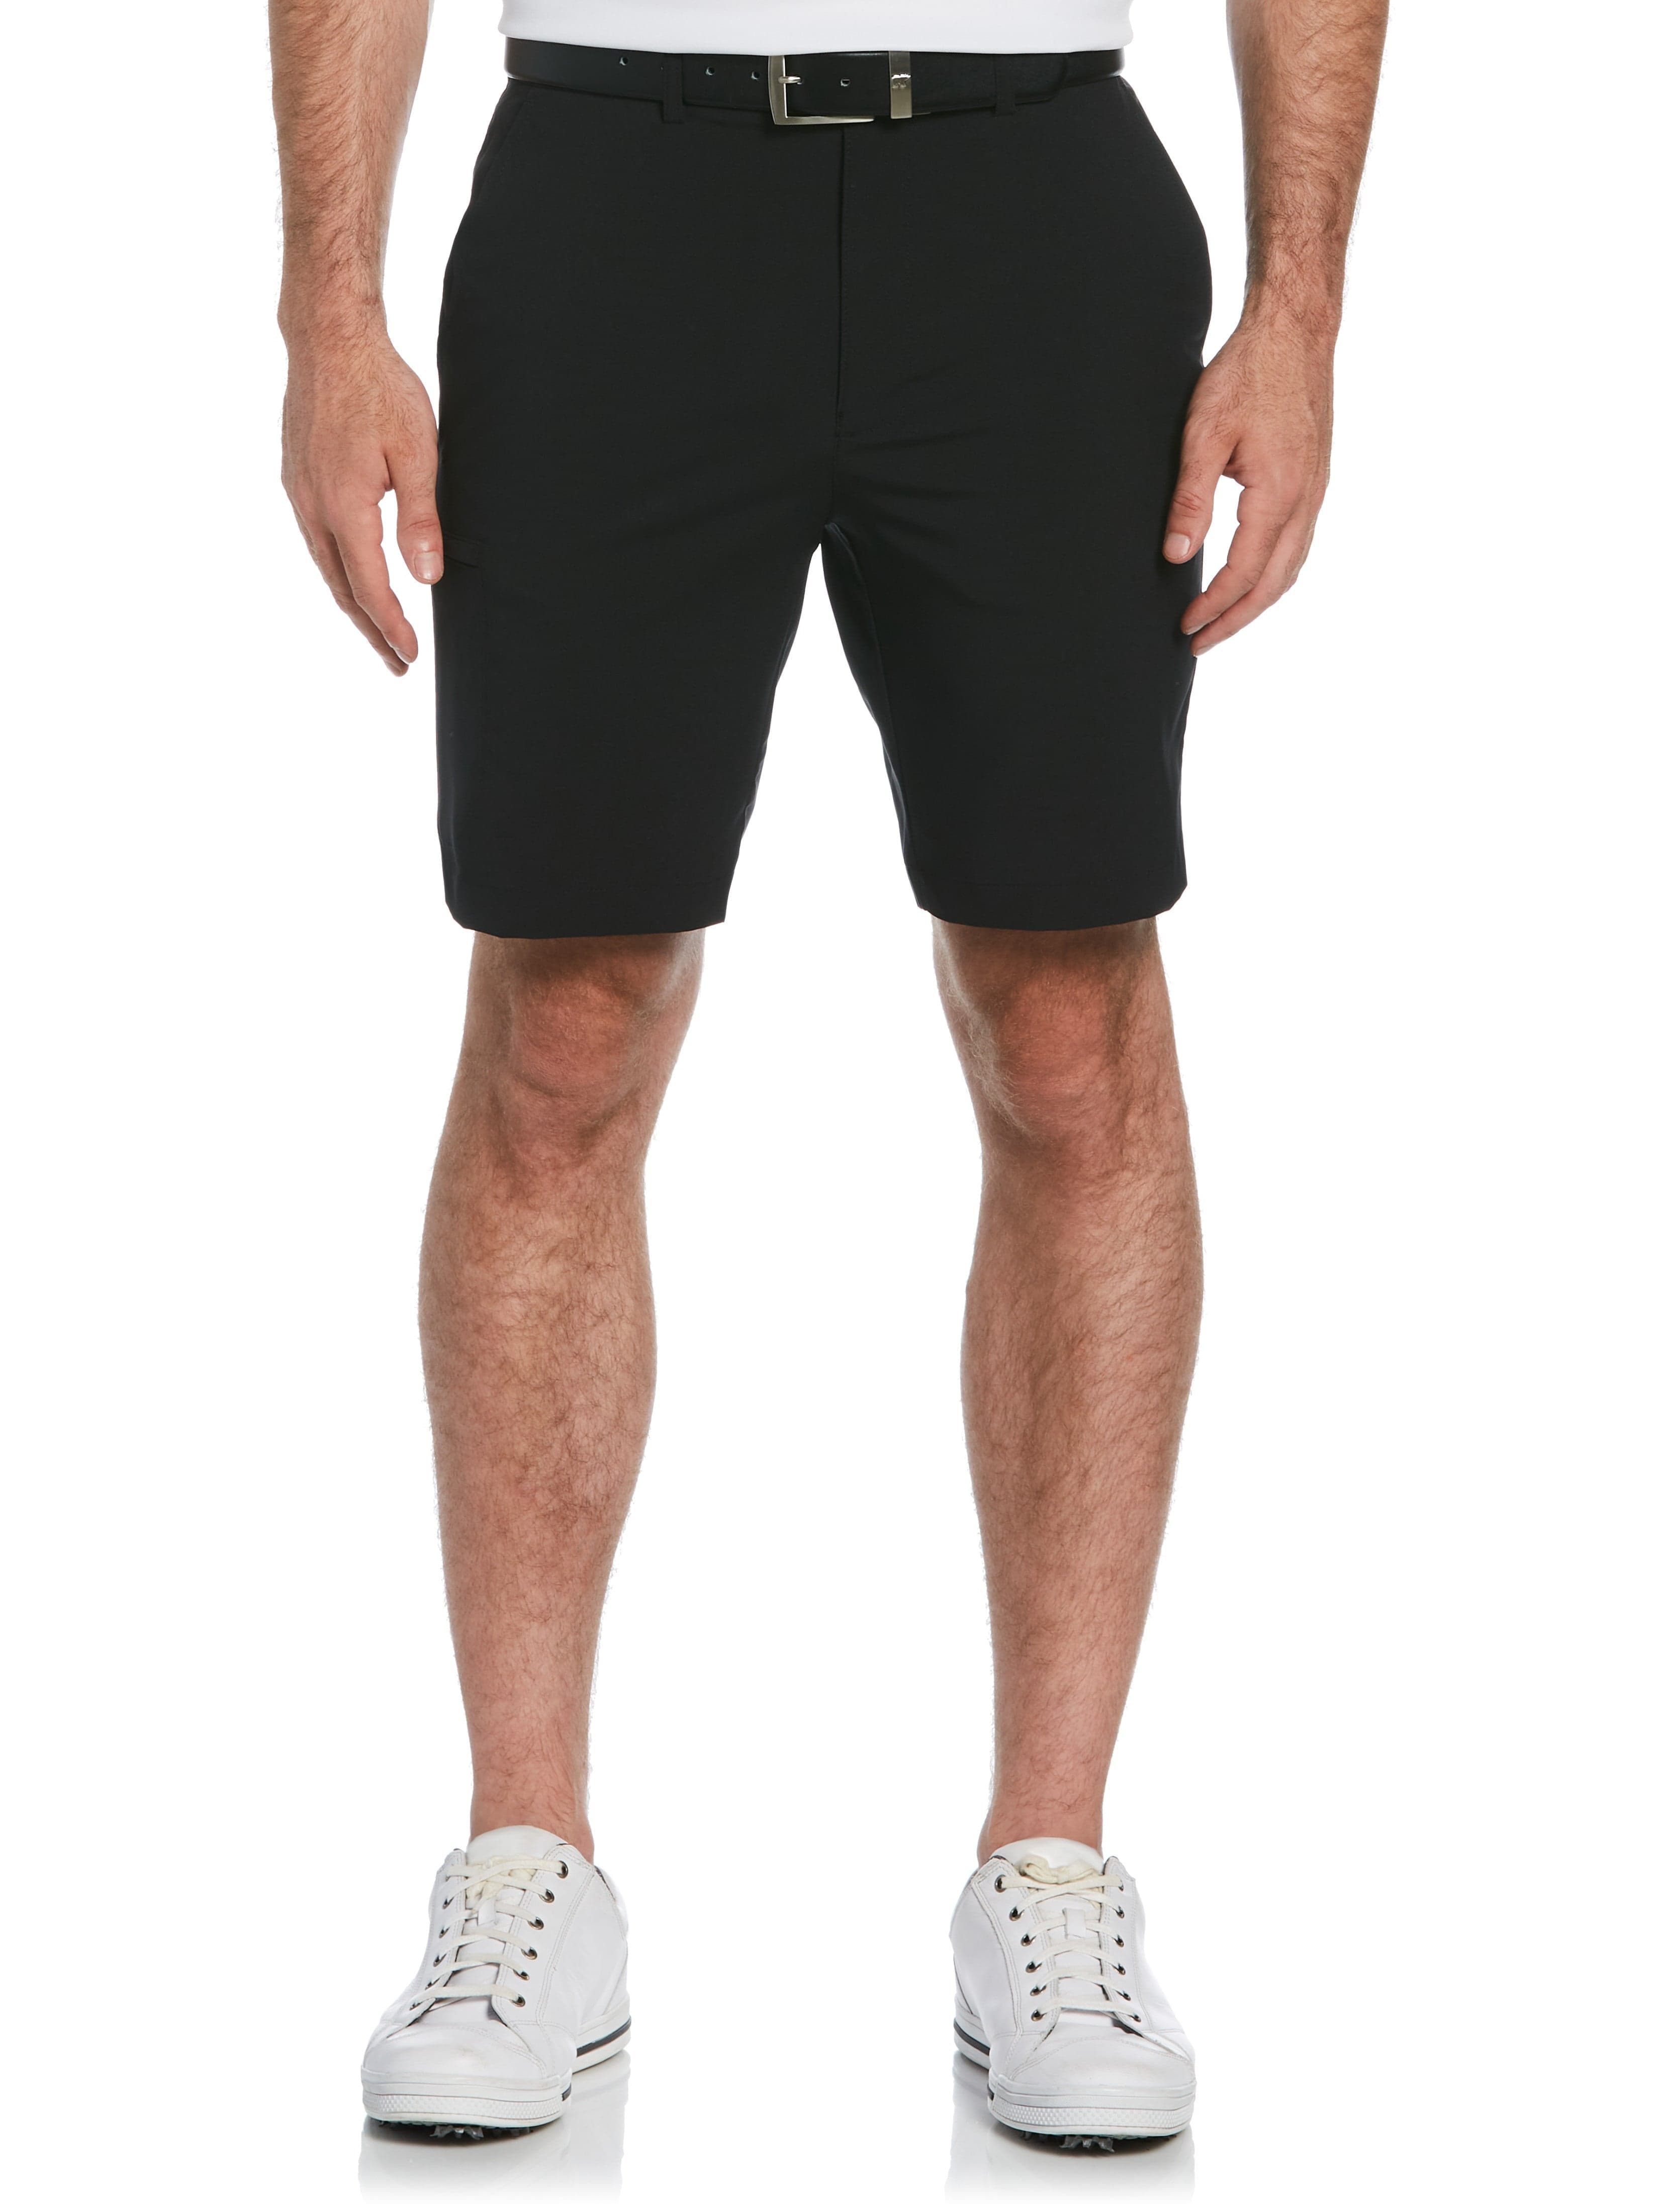 Jack Nicklaus Mens Flat Front Solid Golf Shorts w/ Cargo Pocket, Size 38, Black, 100% Polyester | Golf Apparel Shop